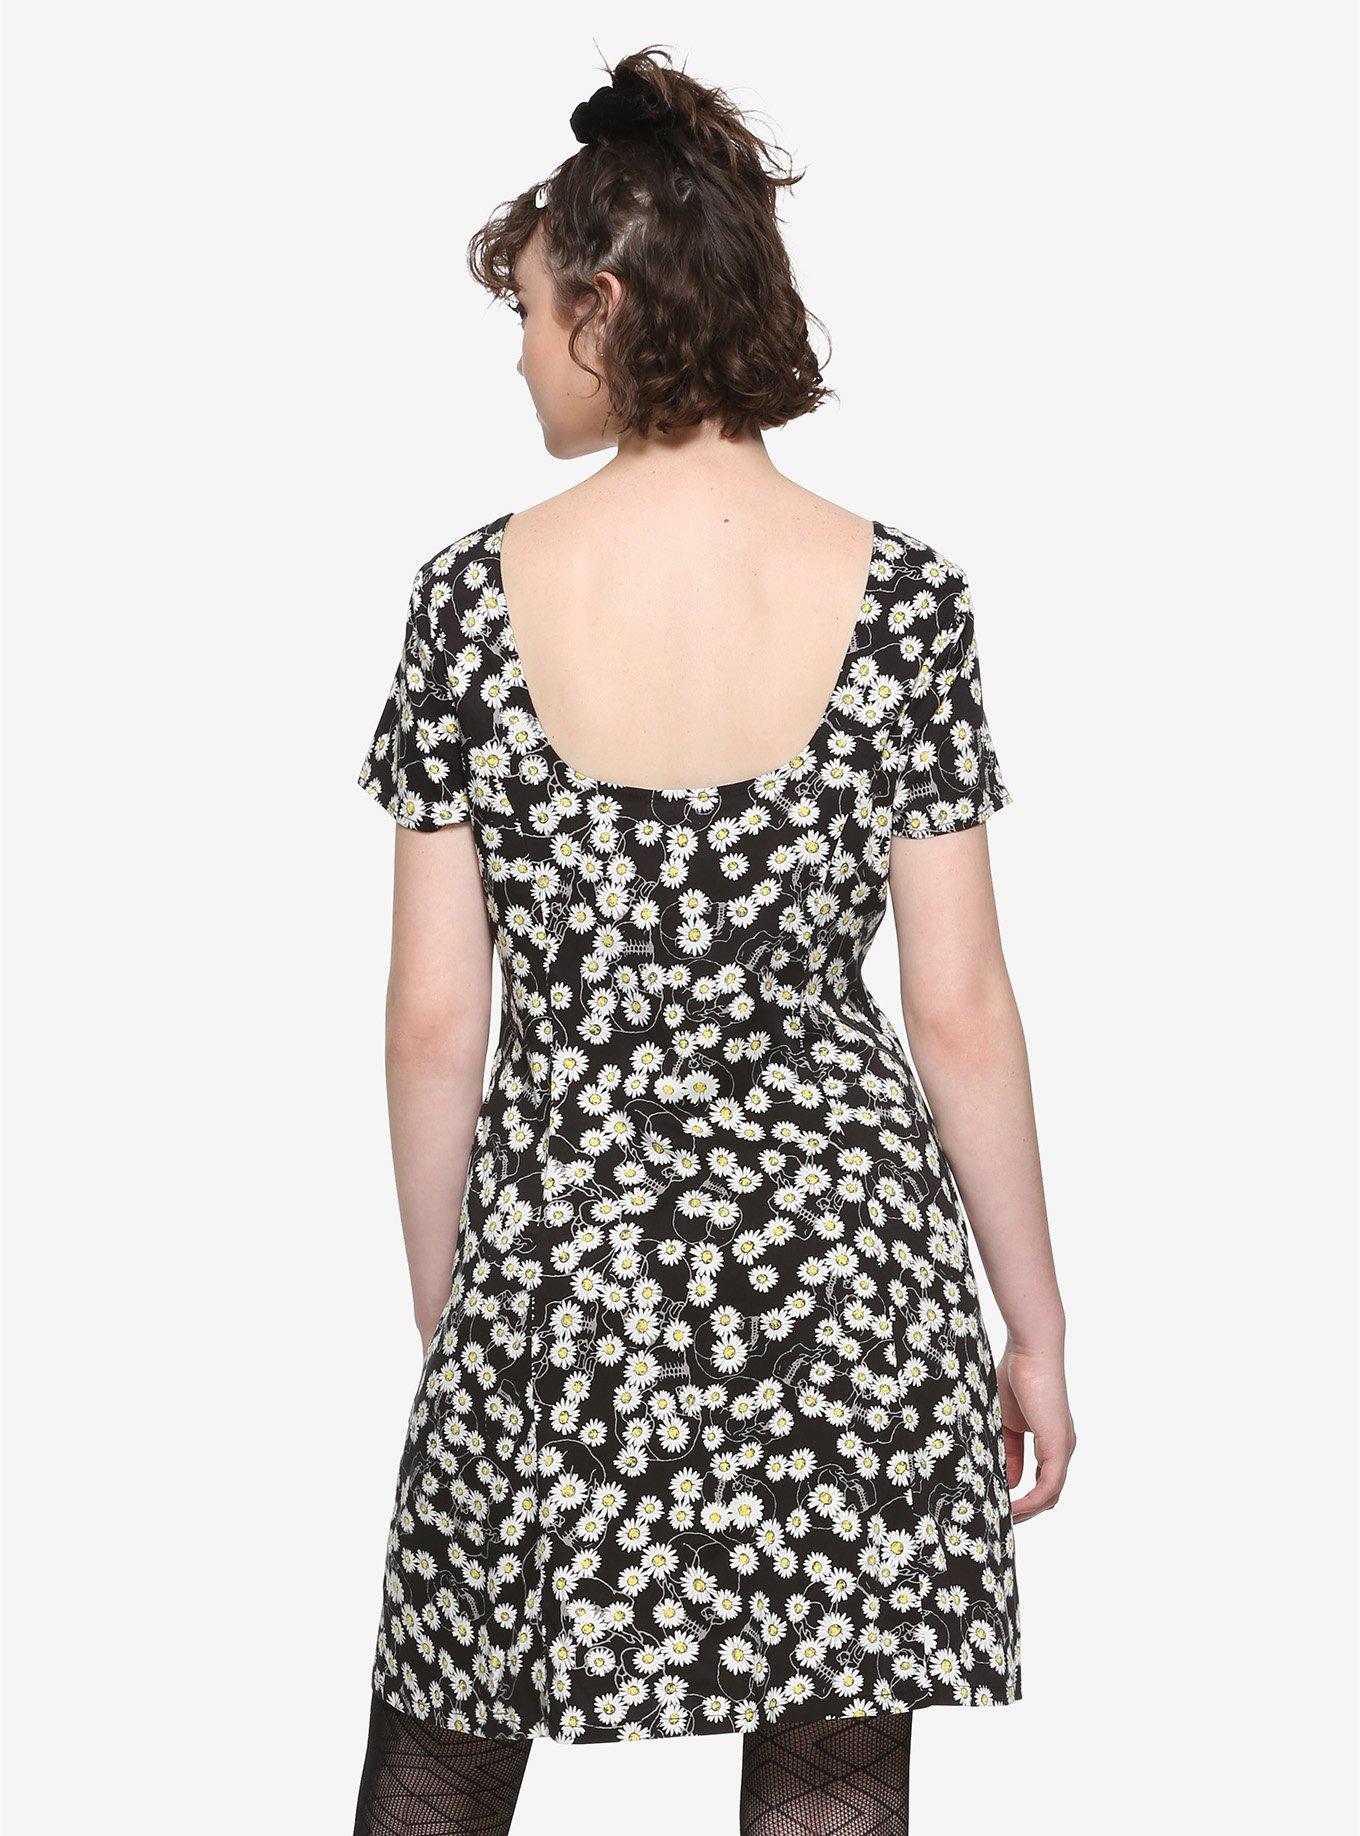 Daisy & Skulls Button-Front Dress, FLORAL, alternate